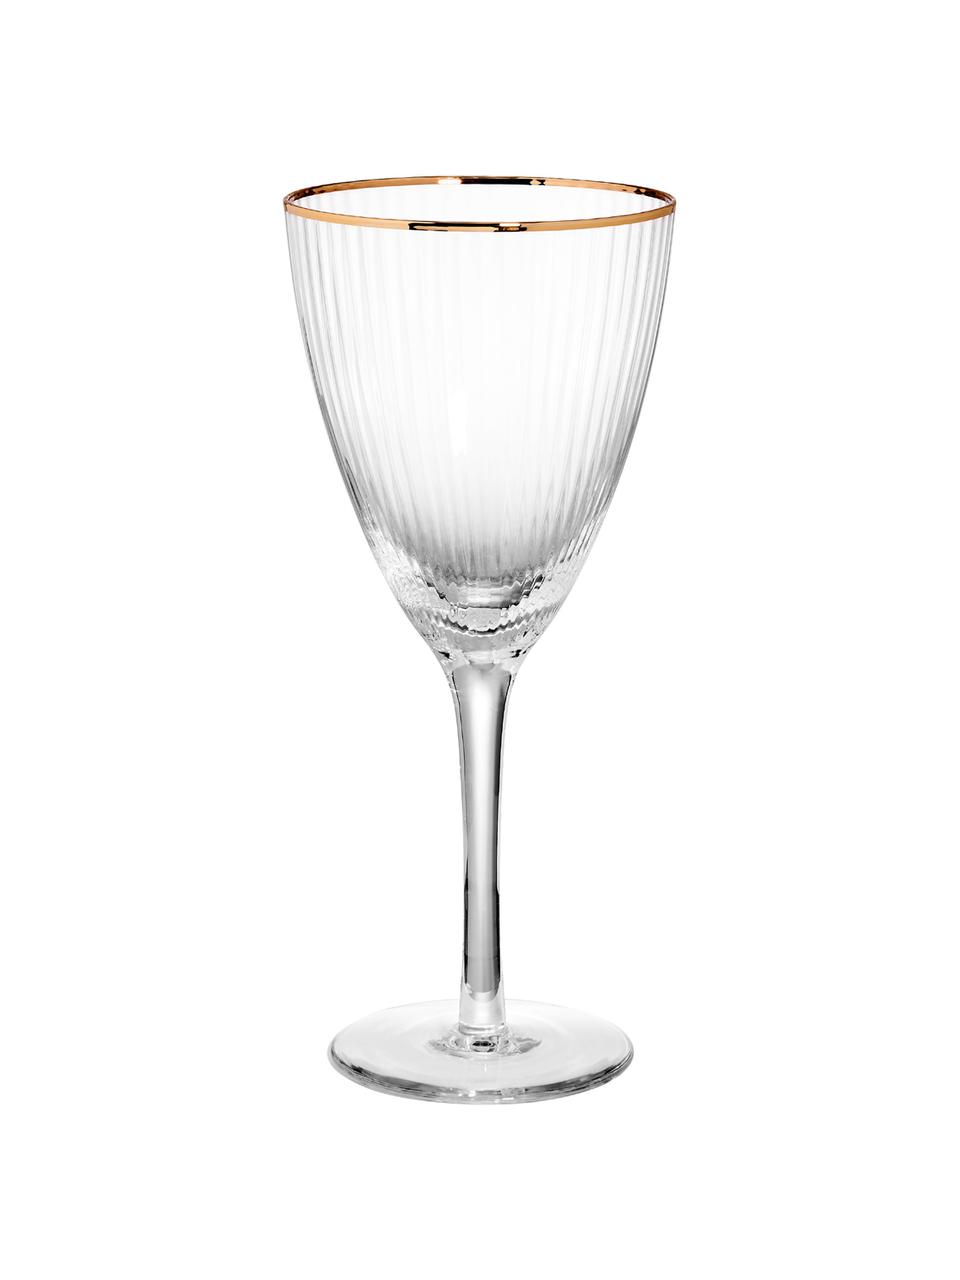 Weingläser Golden Twenties mit Goldrand, 4 Stück, Glas, Transparent, Ø 9 x H 22 cm, 280 ml